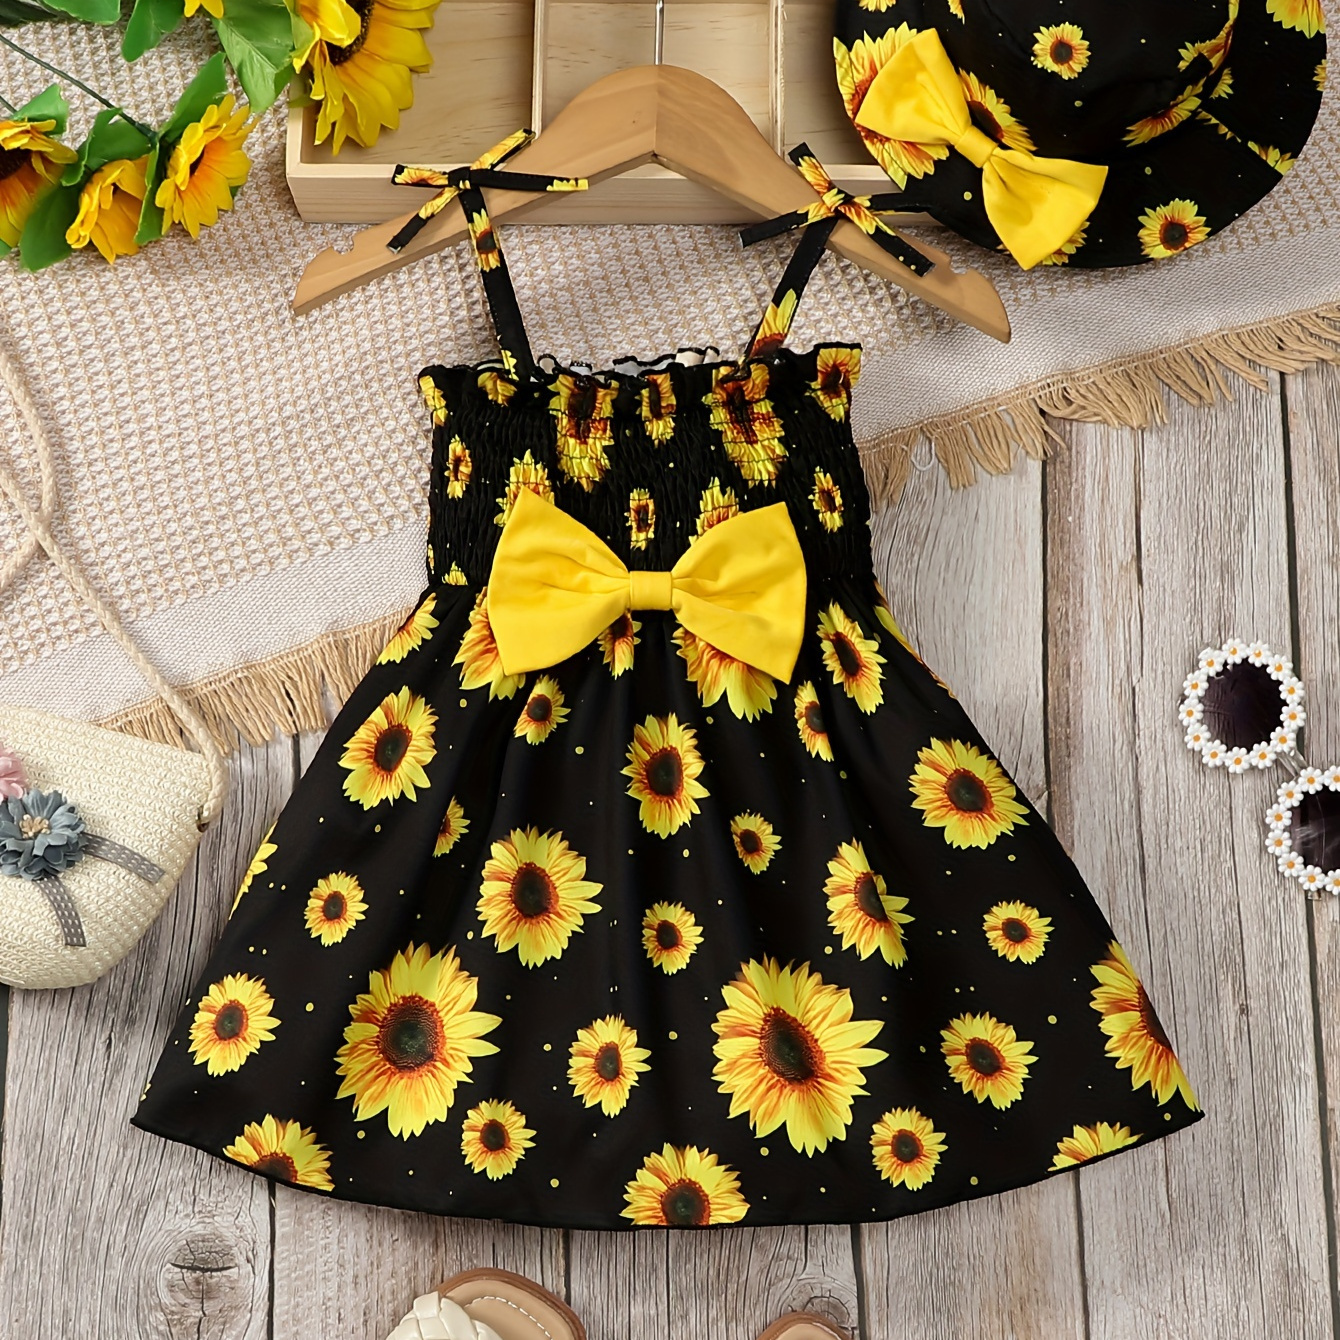 

Baby's Bowknot Decor Cartoon Sunflower Pattern Shirred Sleeveless Dress & Hat, Infant & Toddler Girl's Clothing For Summer/spring, As Gift